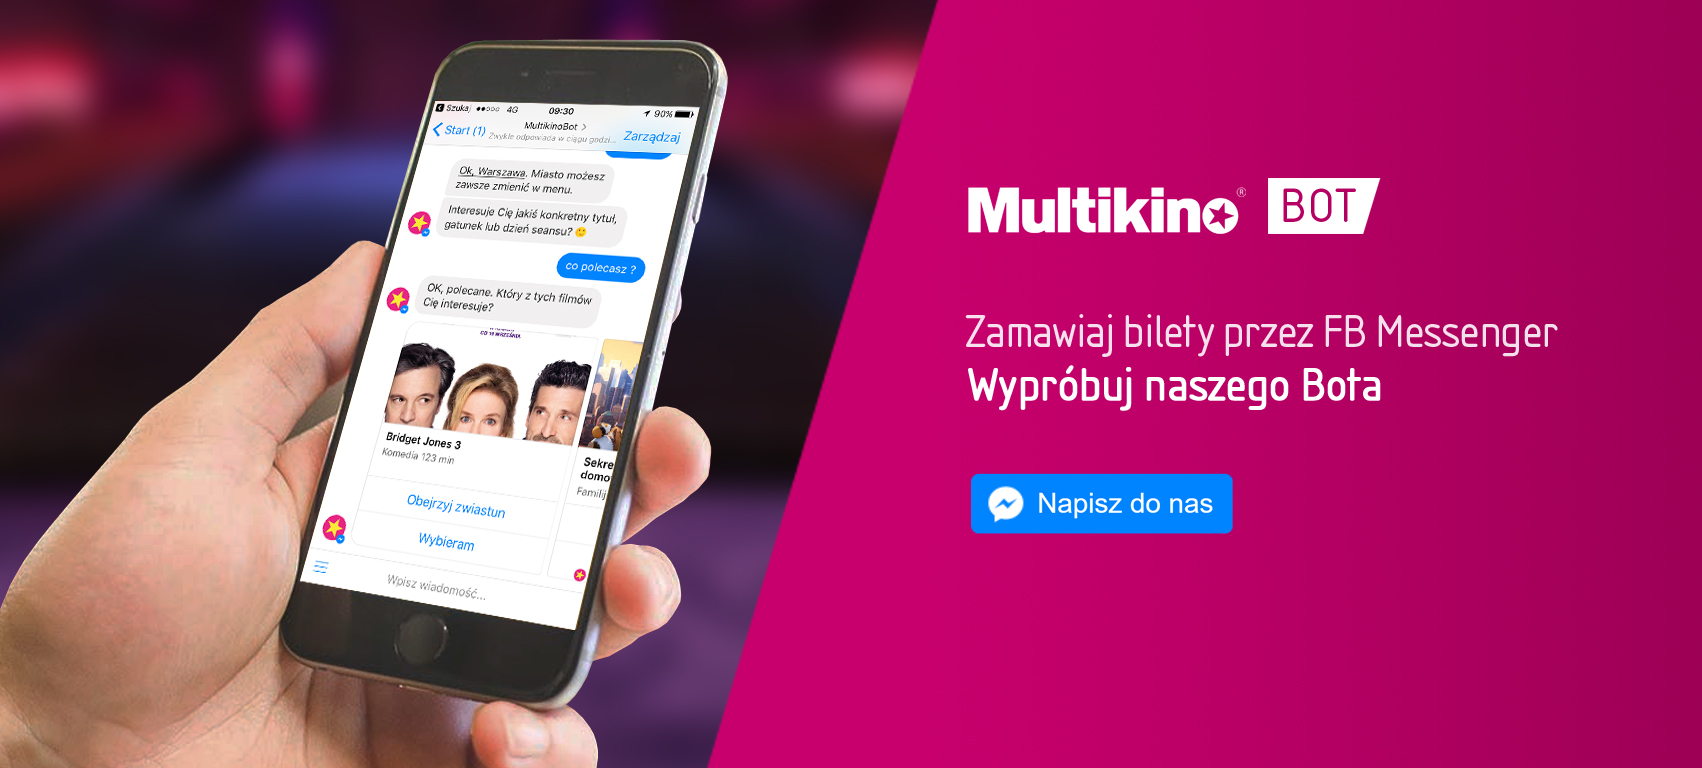 Multikino jako pierwsze w Europie z nowym funkcjami Facebook-a Multikino MultikinoBot GRAFIKA